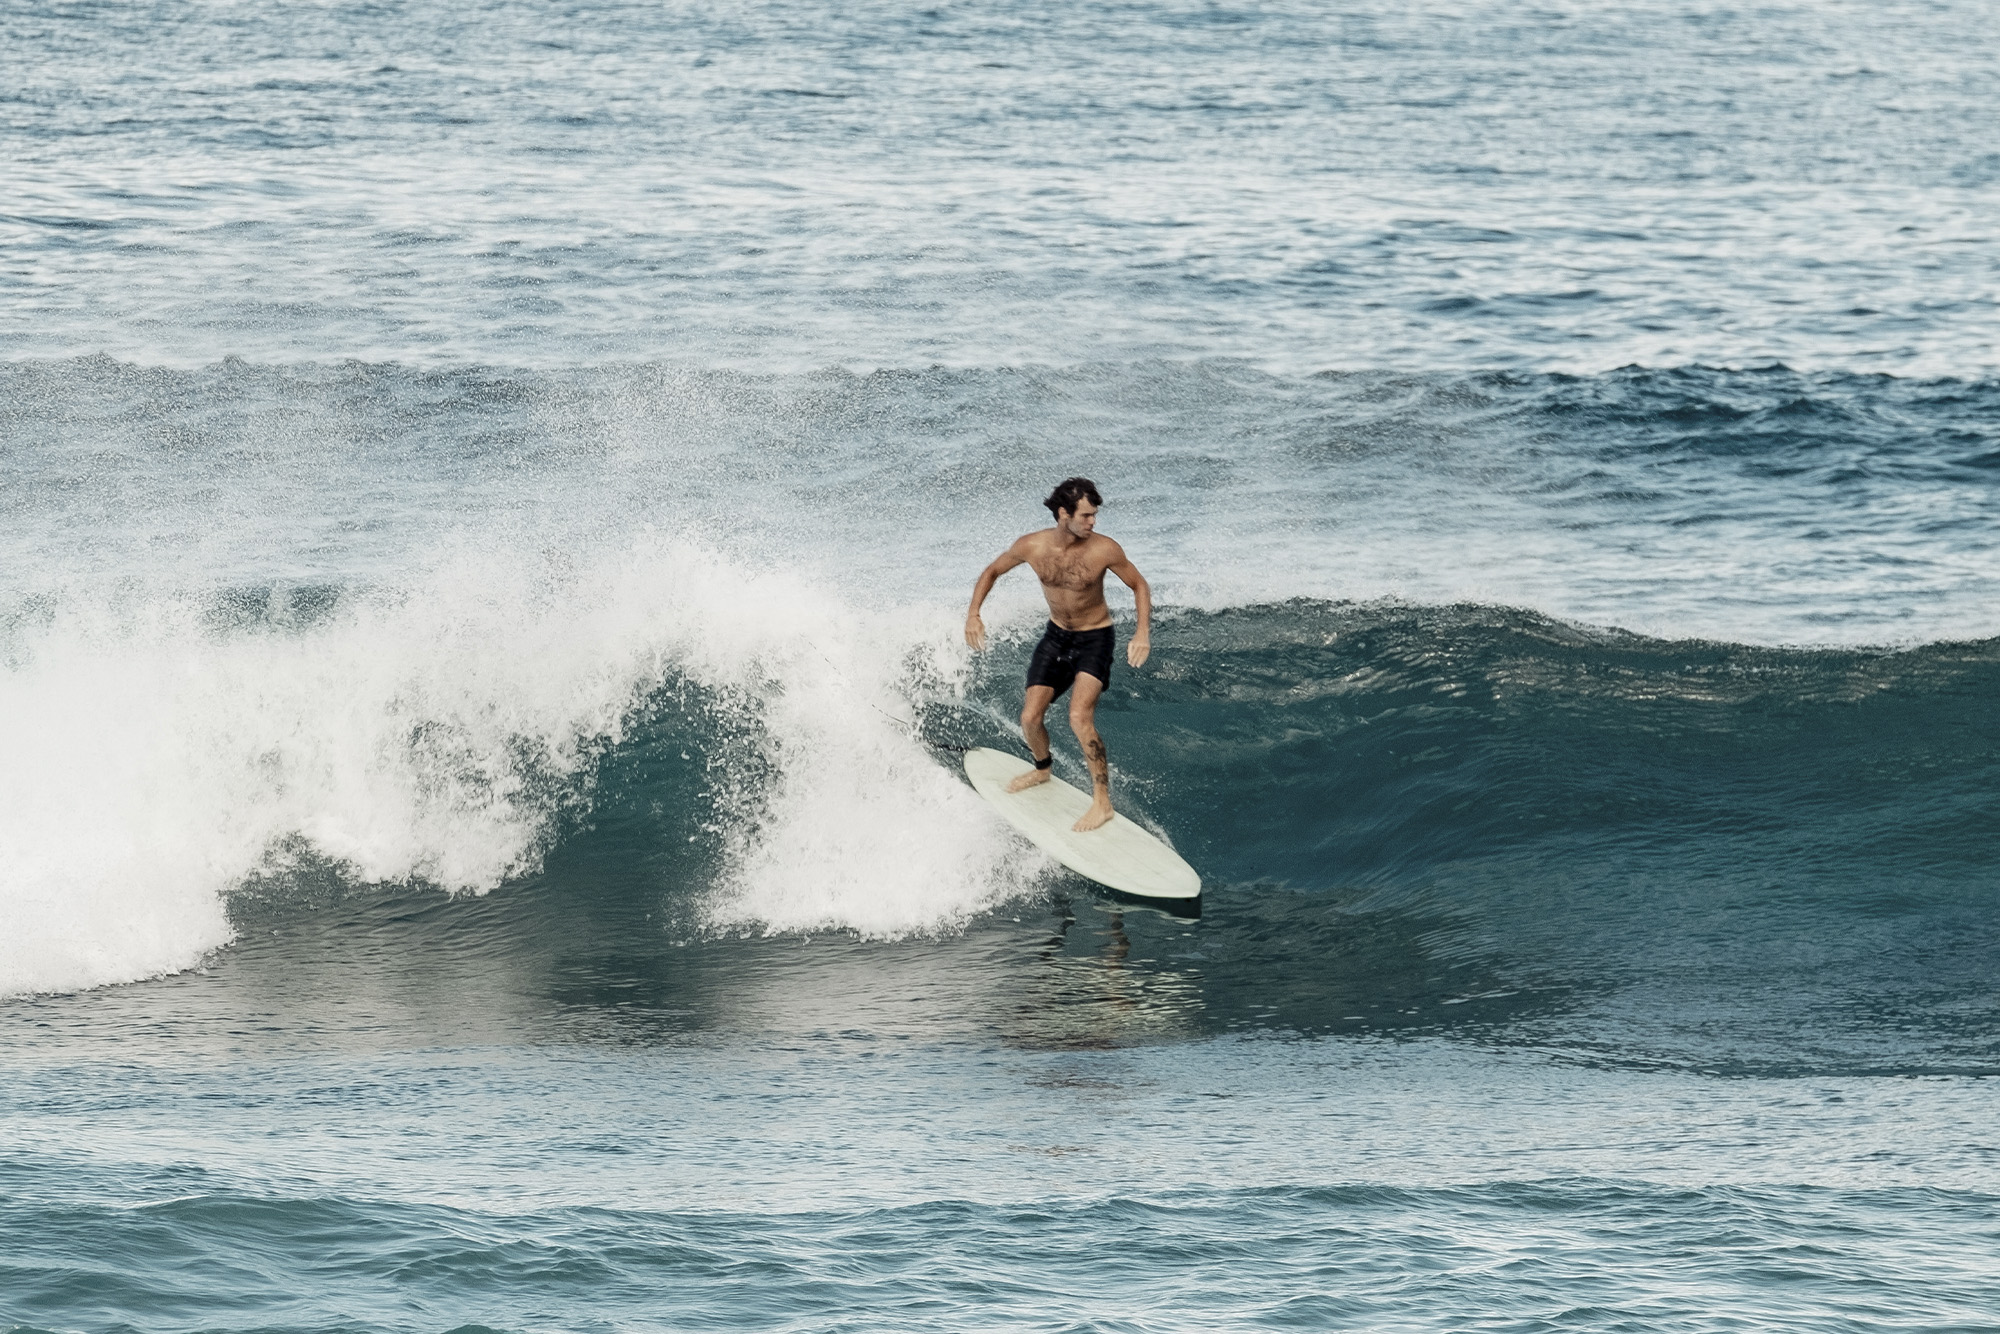 Someone surfs at Sanubari Sunda, Indonesia